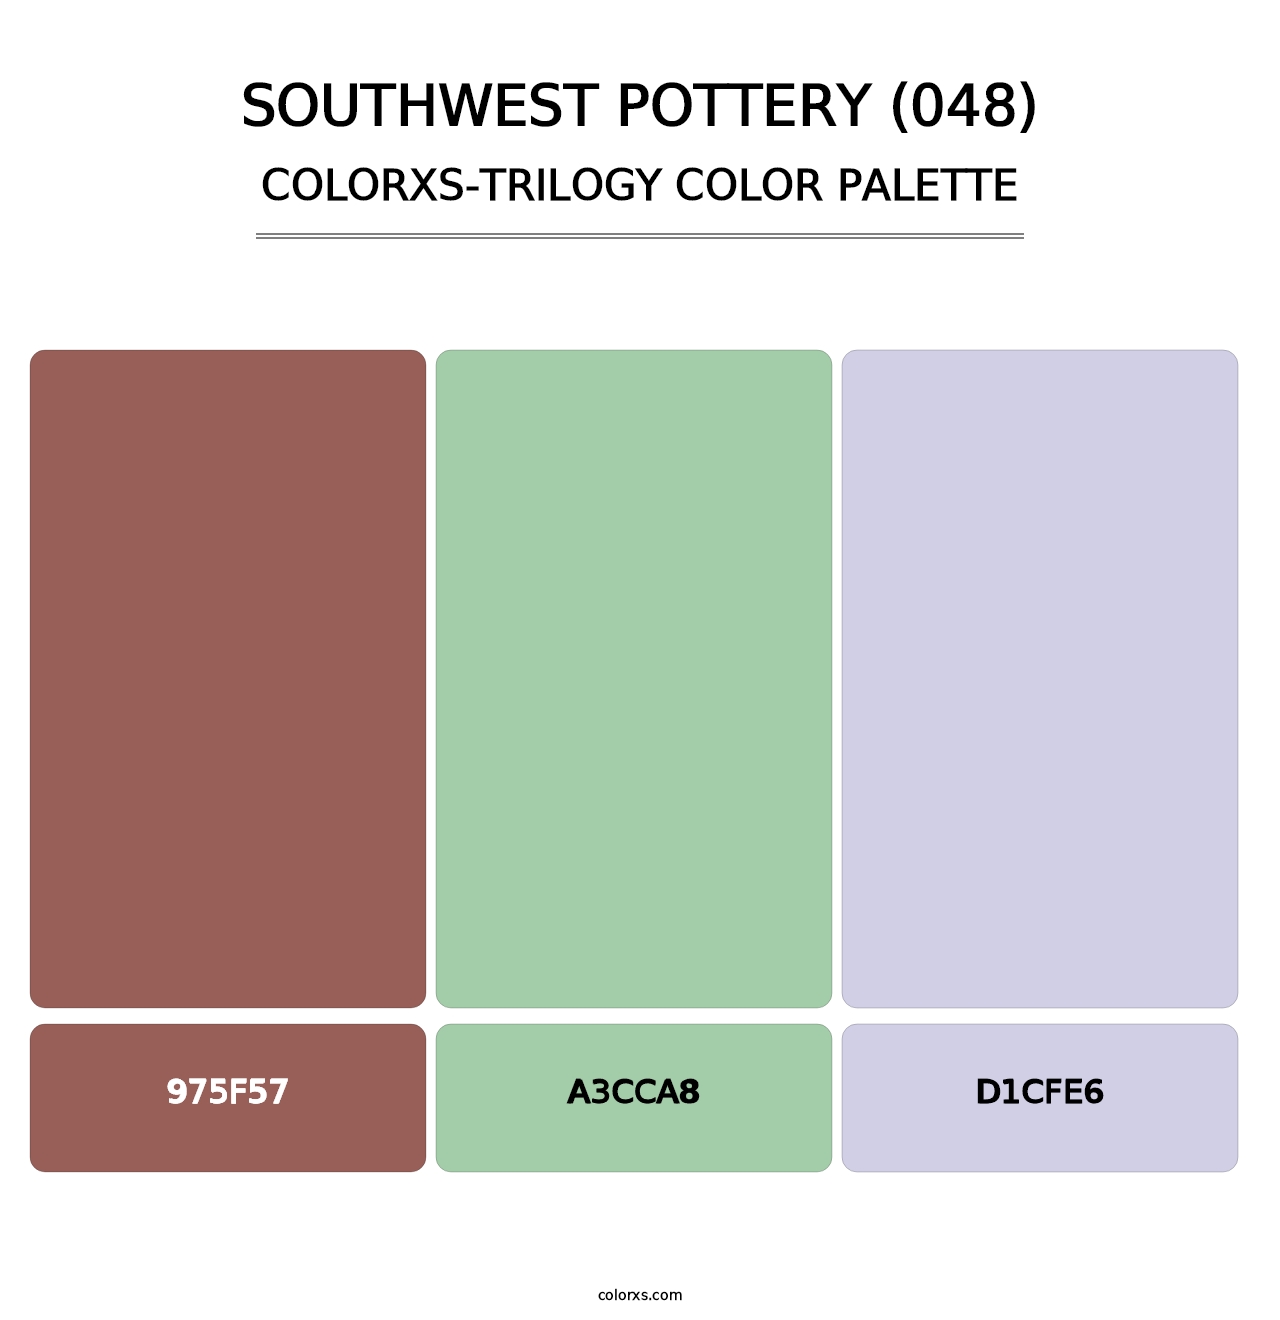 Southwest Pottery (048) - Colorxs Trilogy Palette